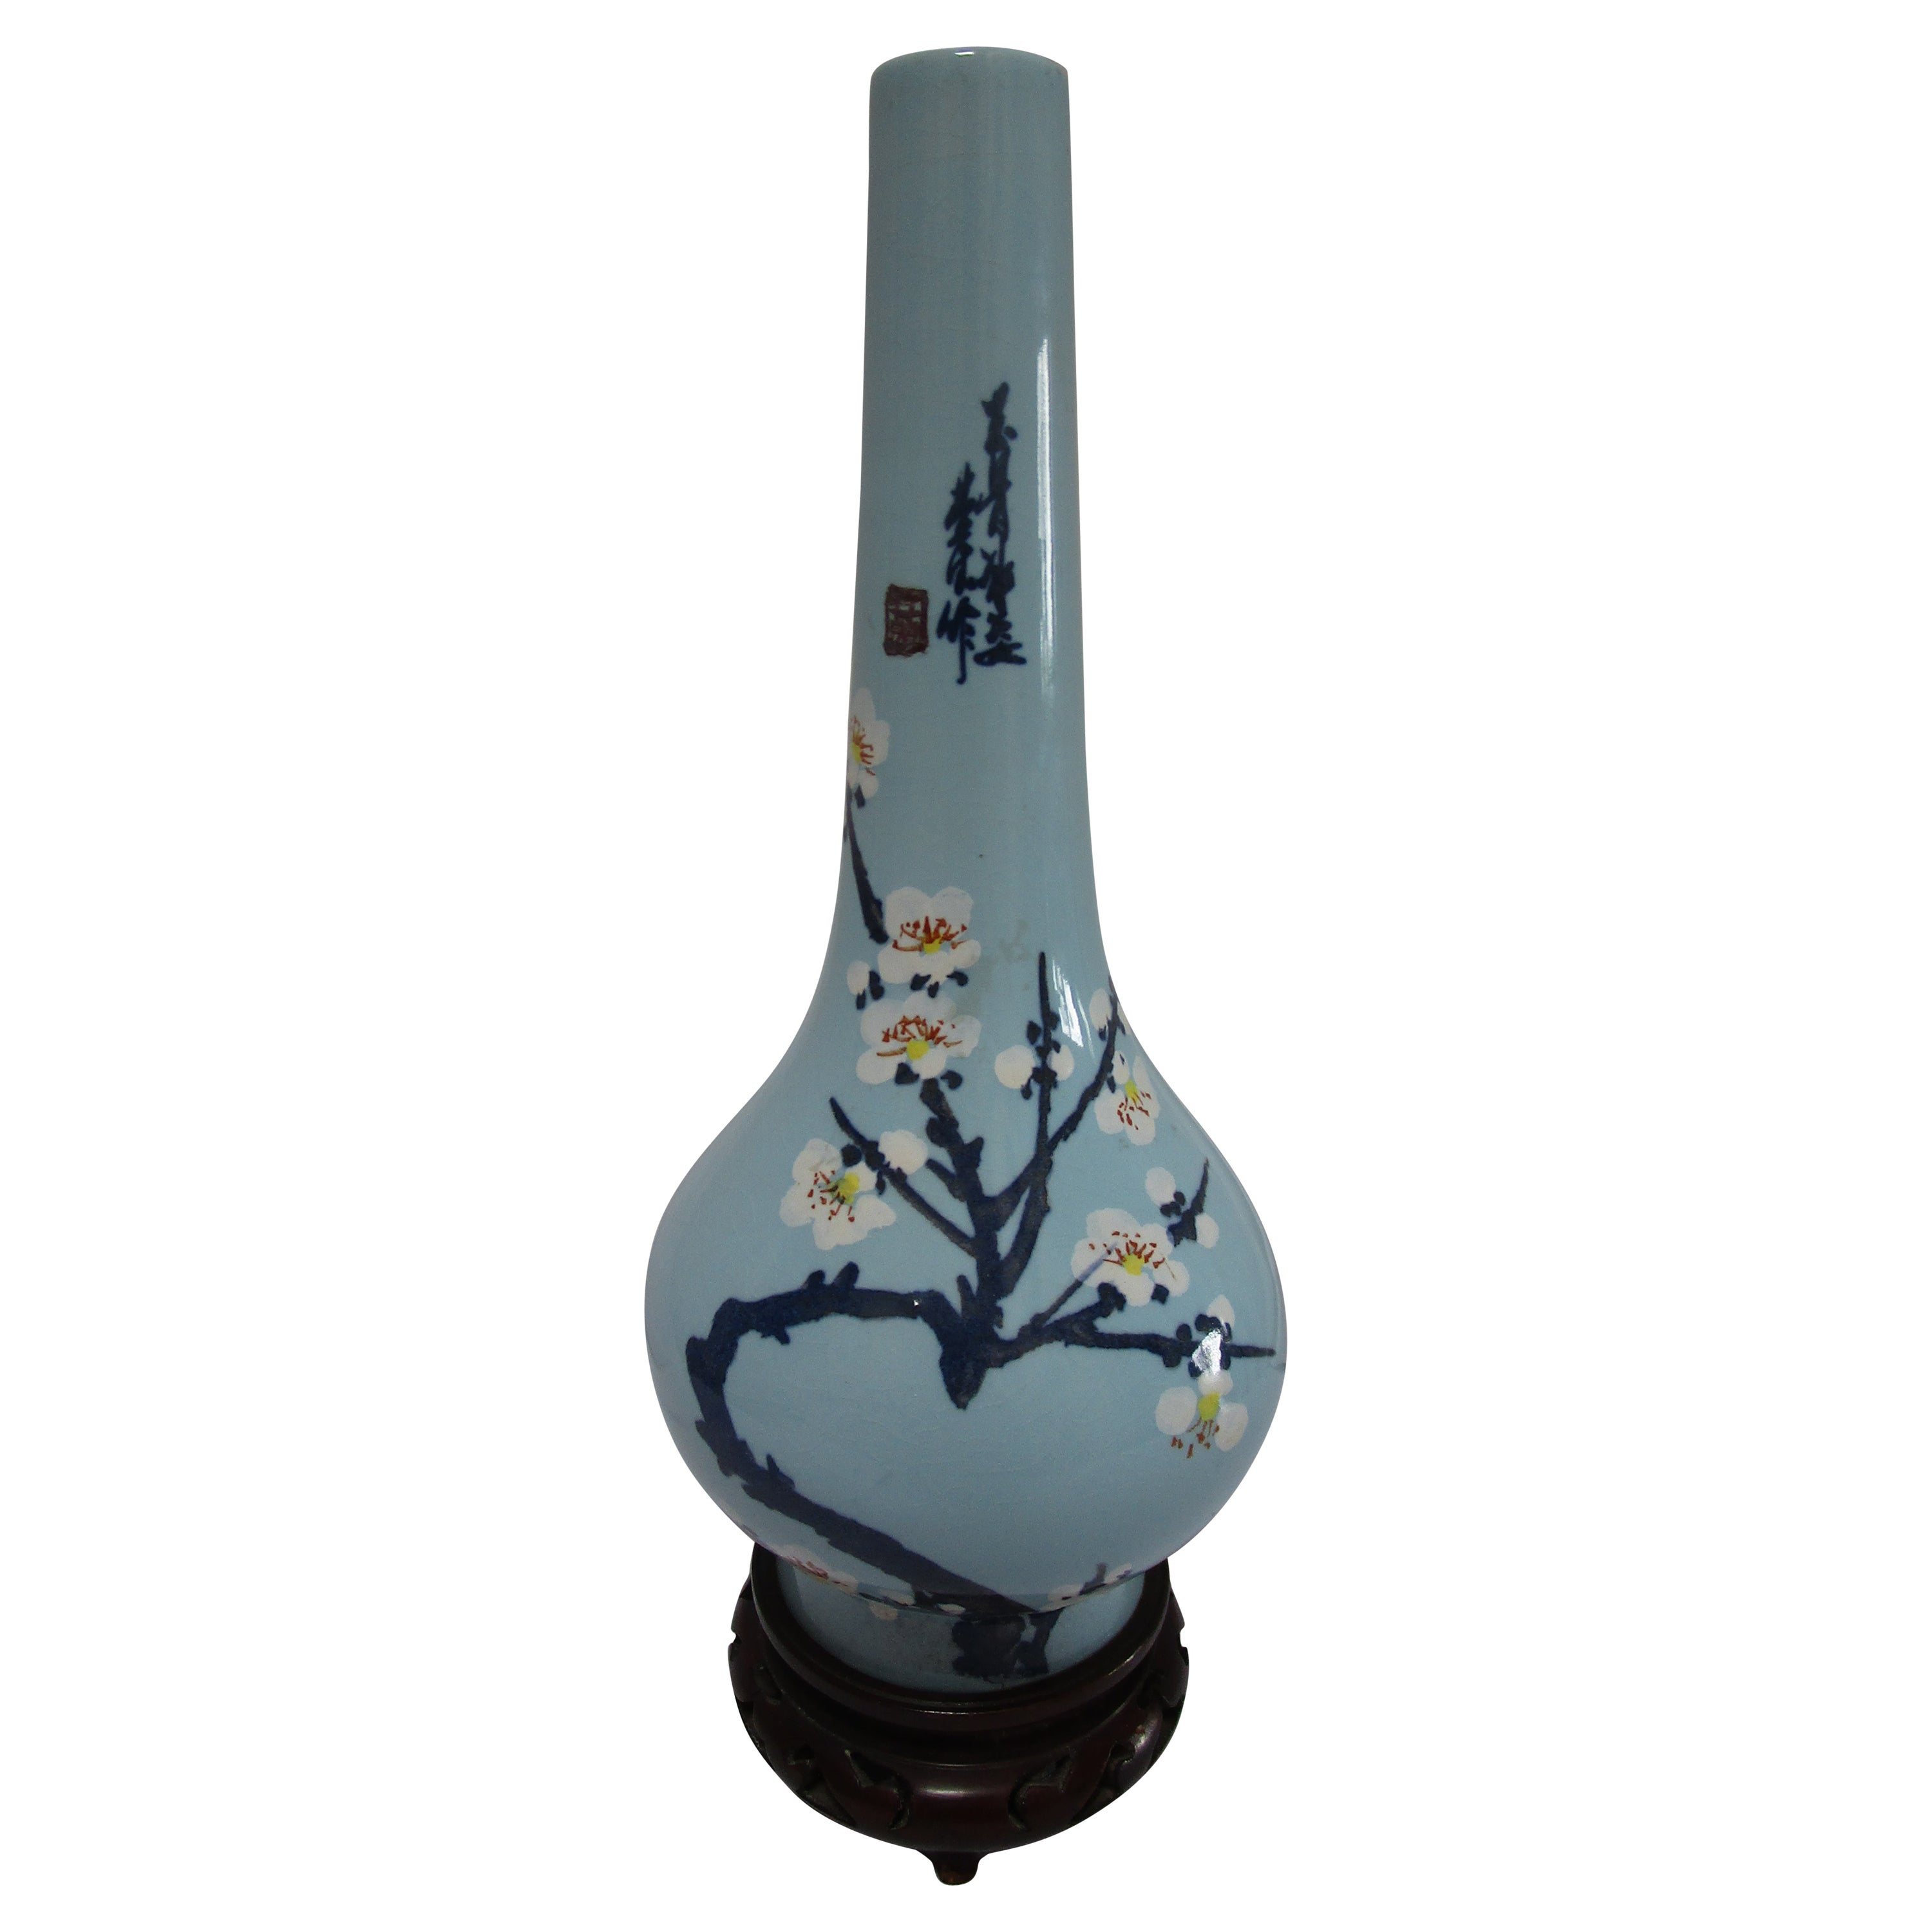 Türkisfarbene japanische Vintage-Keramik-Vase auf Rosenholz Stand